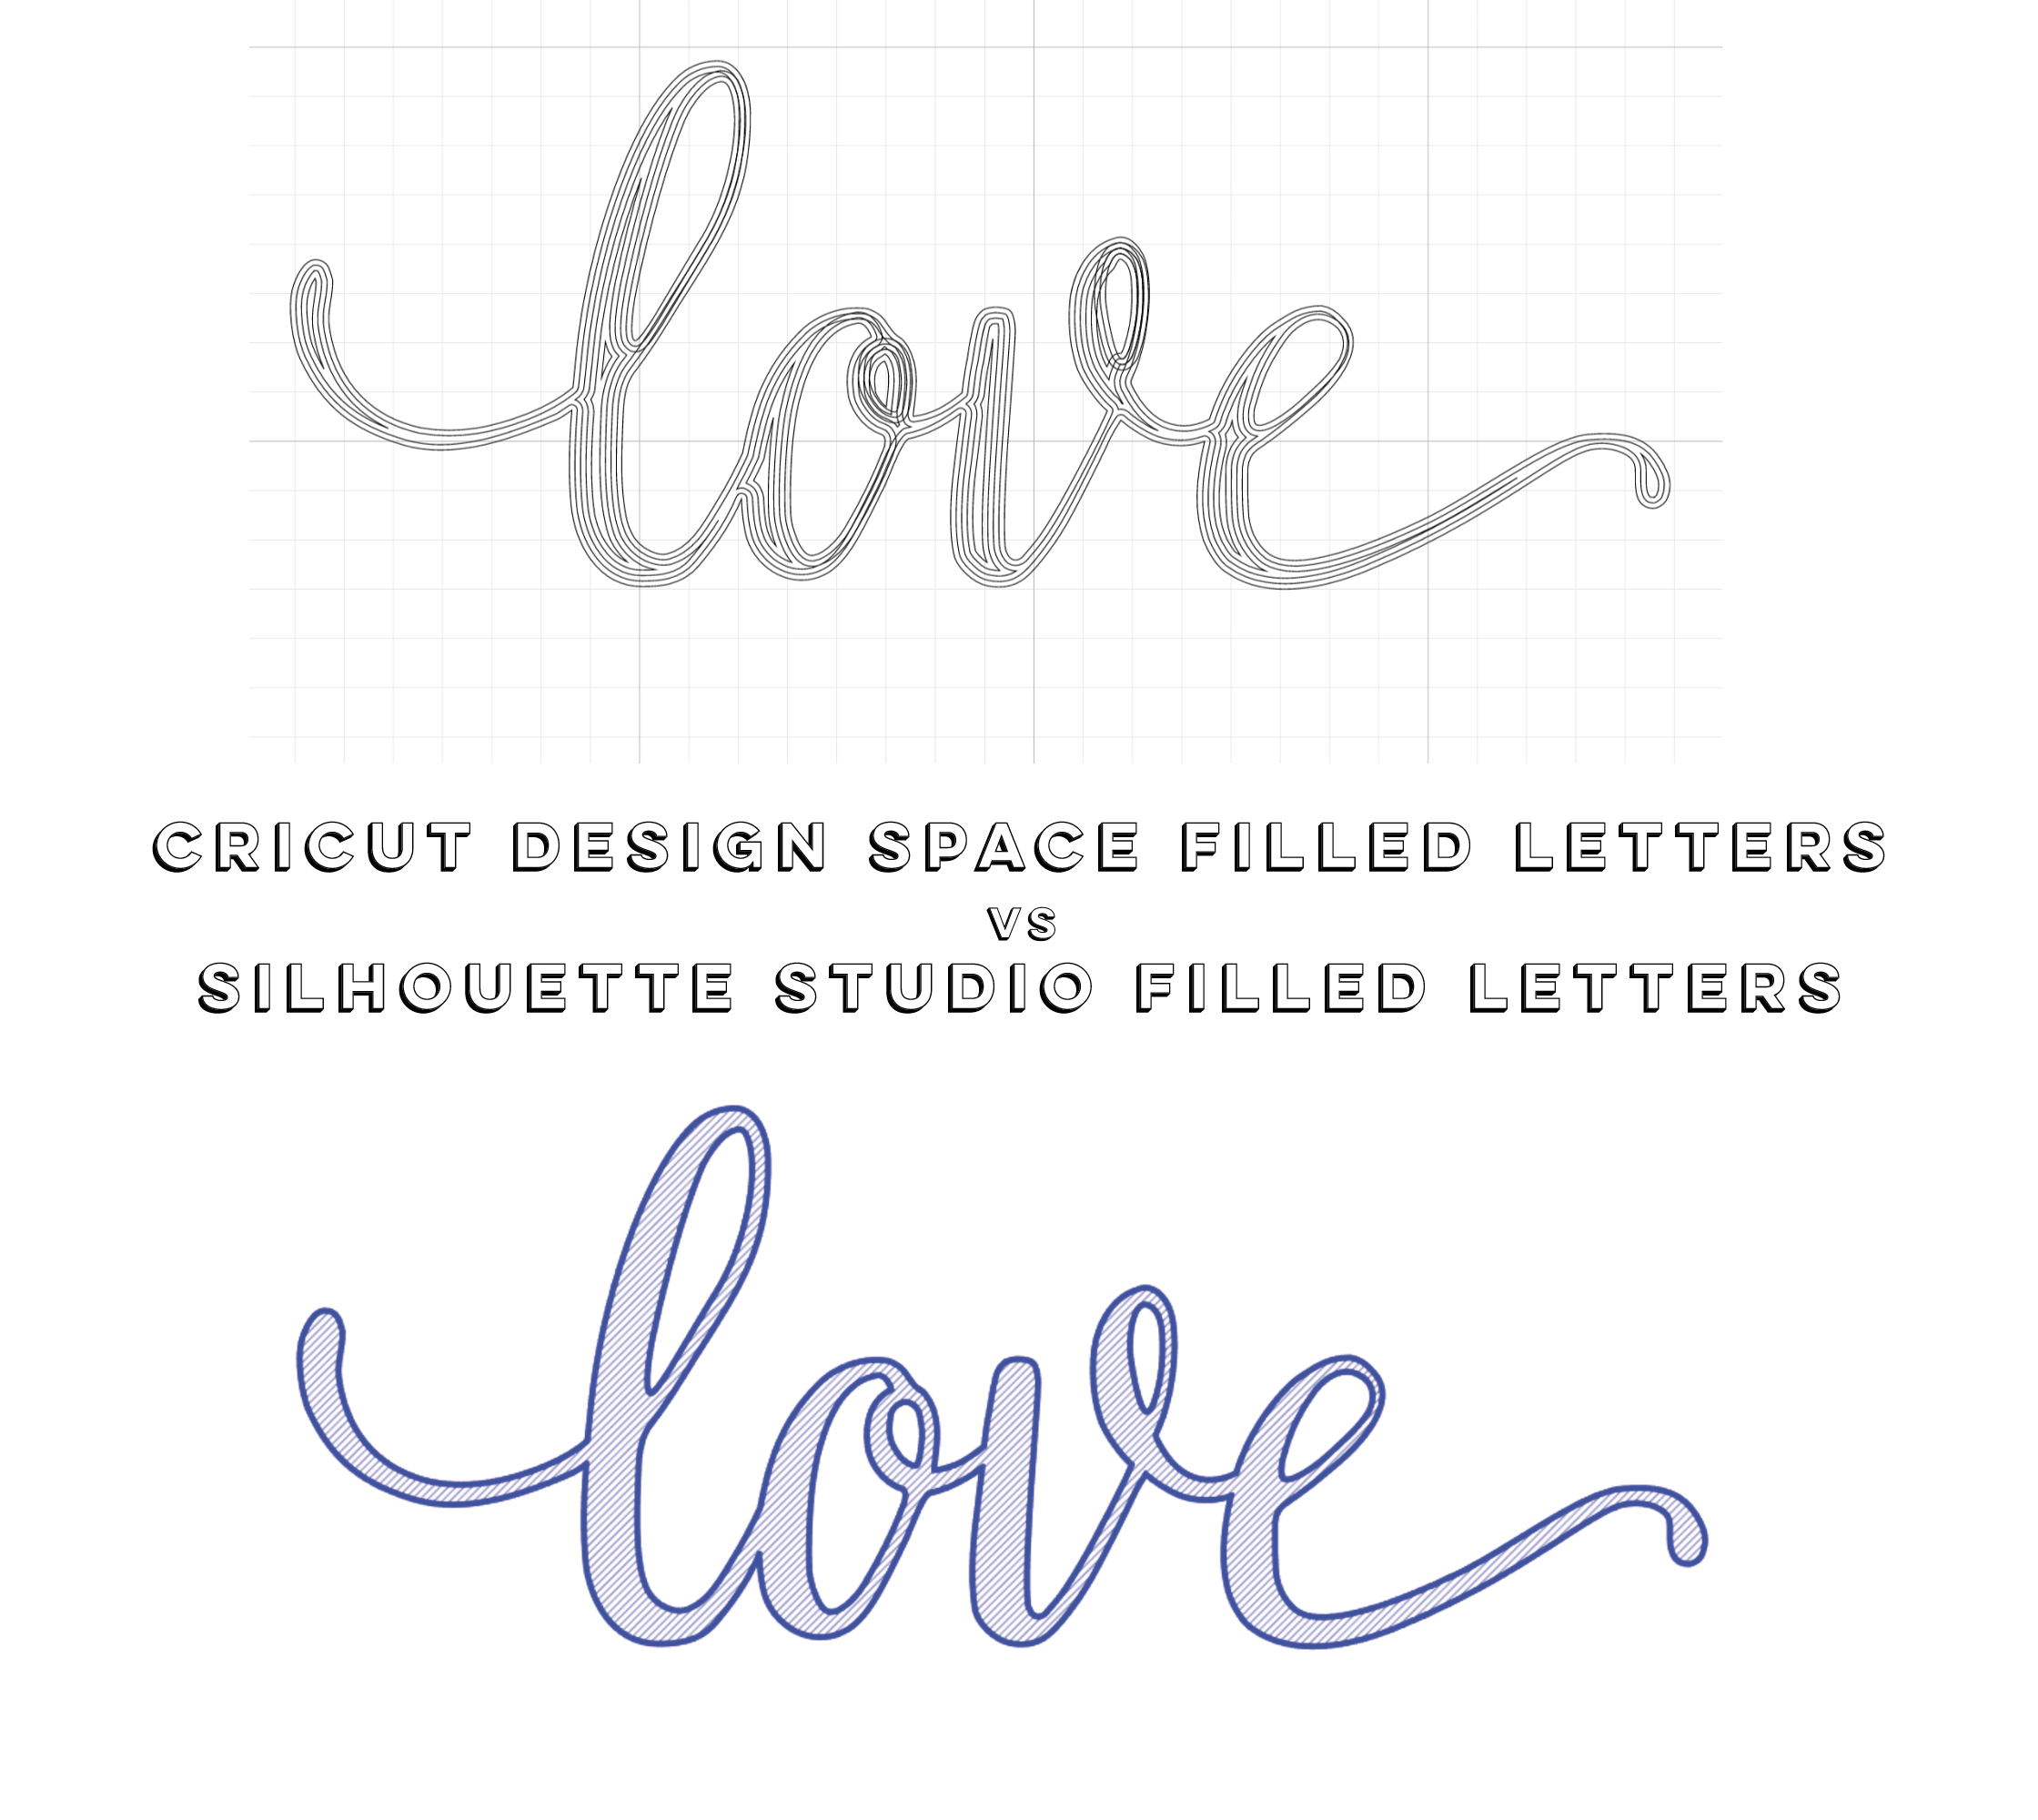 Paper Cut Out- by me. ProCreate, Cricut design space, 9 layers. : r/cricut